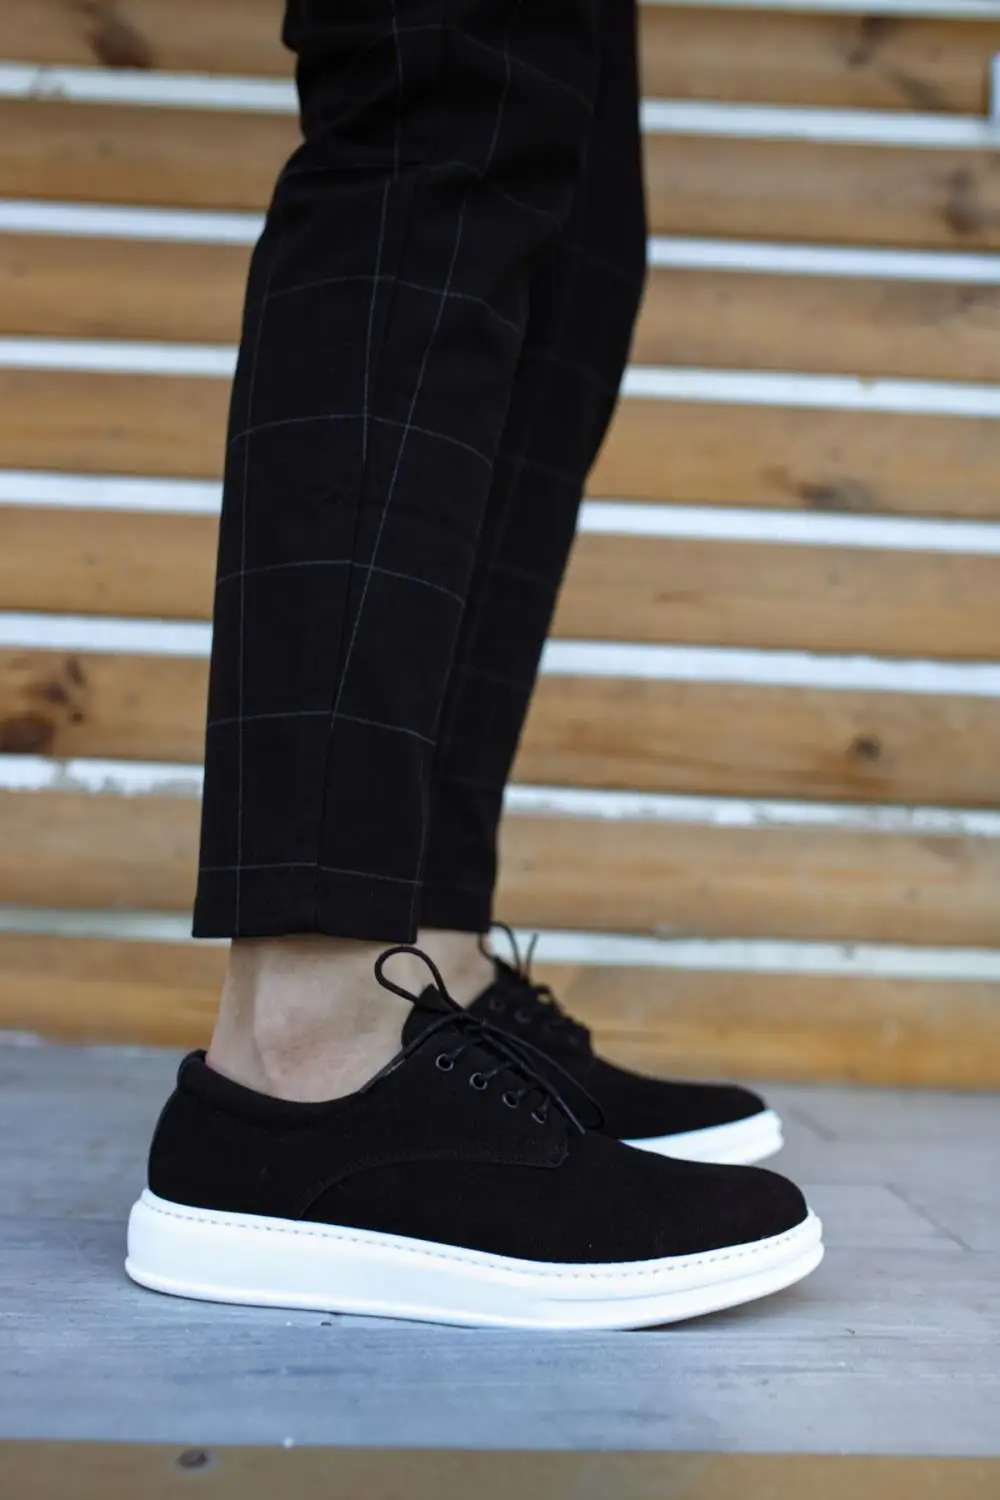 Zapatos informales clásicos para hombre, diseño Original, gamuza negra 001 (Suela blanca) - AliExpress Mobile